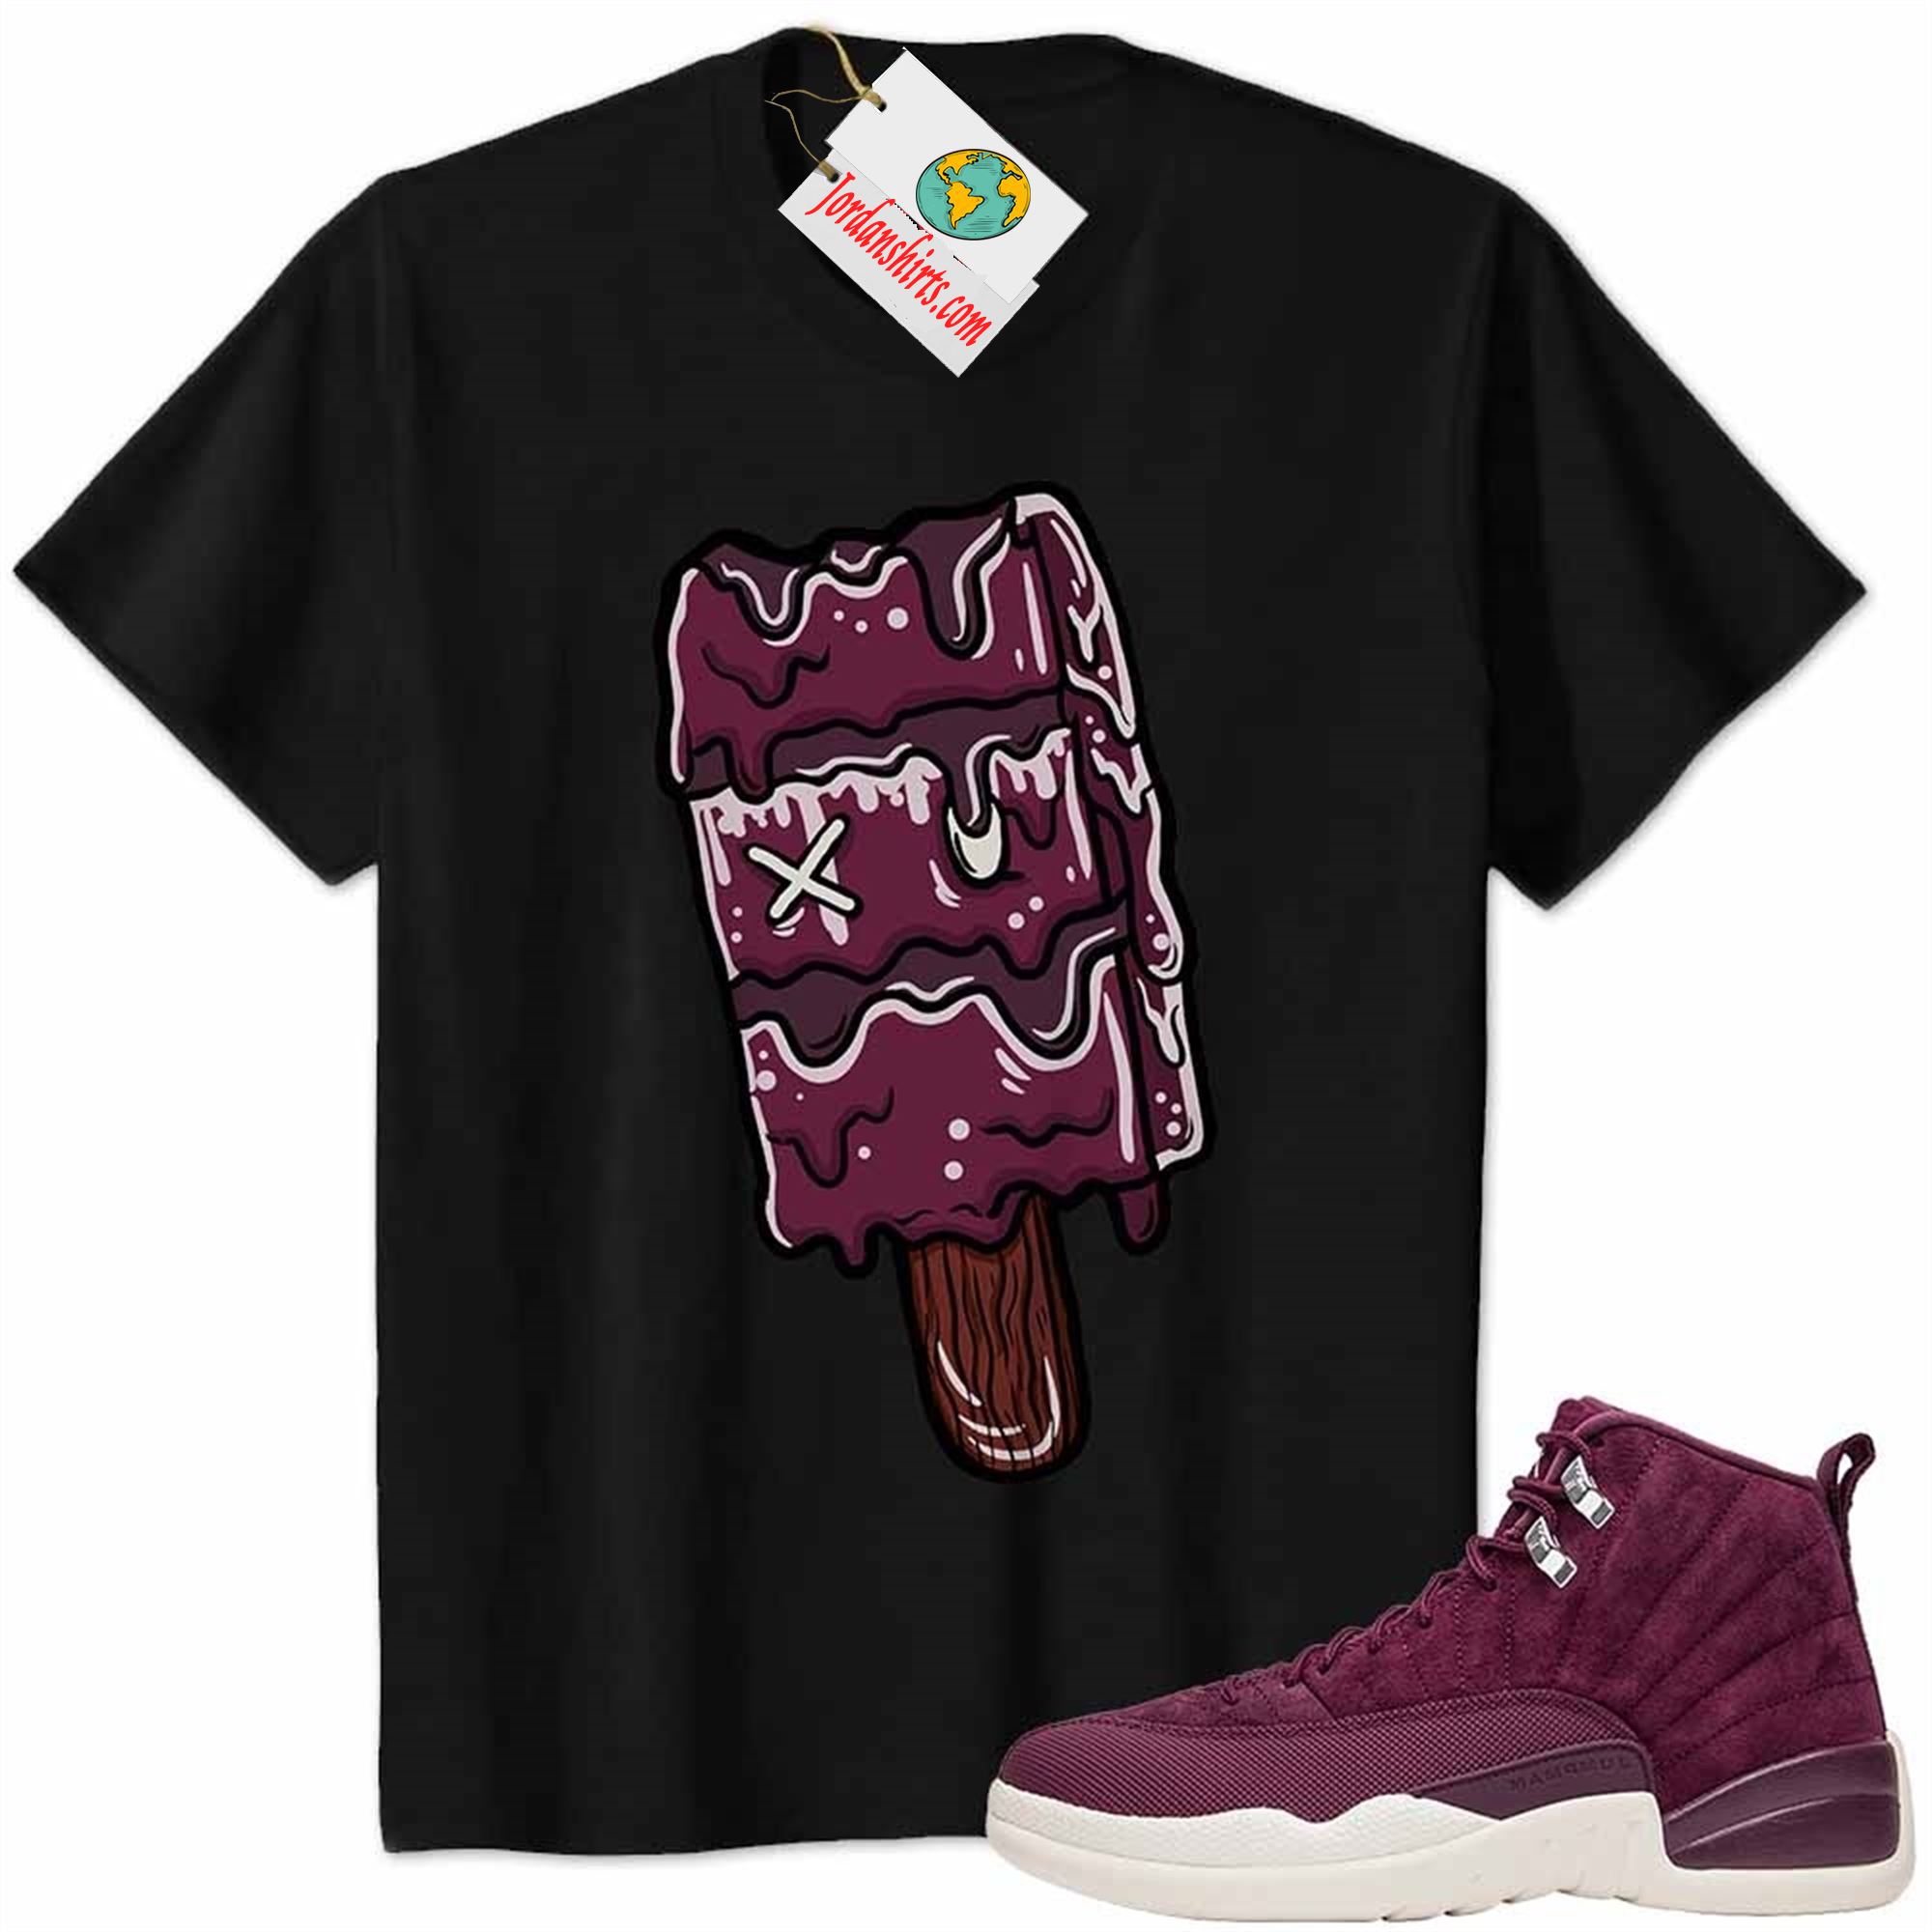 Jordan 12 Shirt, Ice Cream Dripping Black Air Jordan 12 Bordeaux 12s Size Up To 5xl